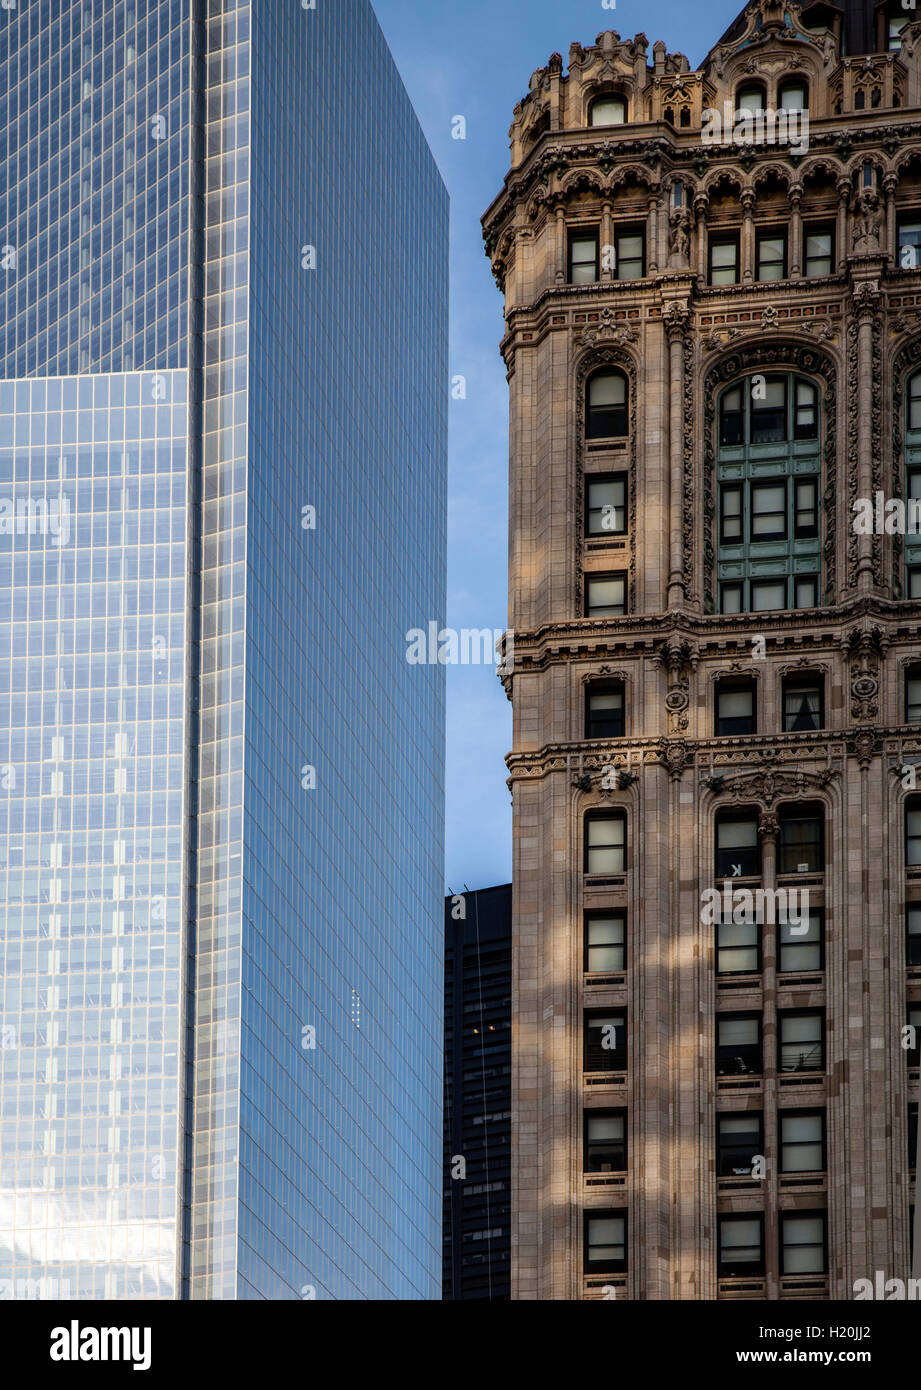 Traditionnel et moderne : contraste architectural à NEW YORK, USA Banque D'Images